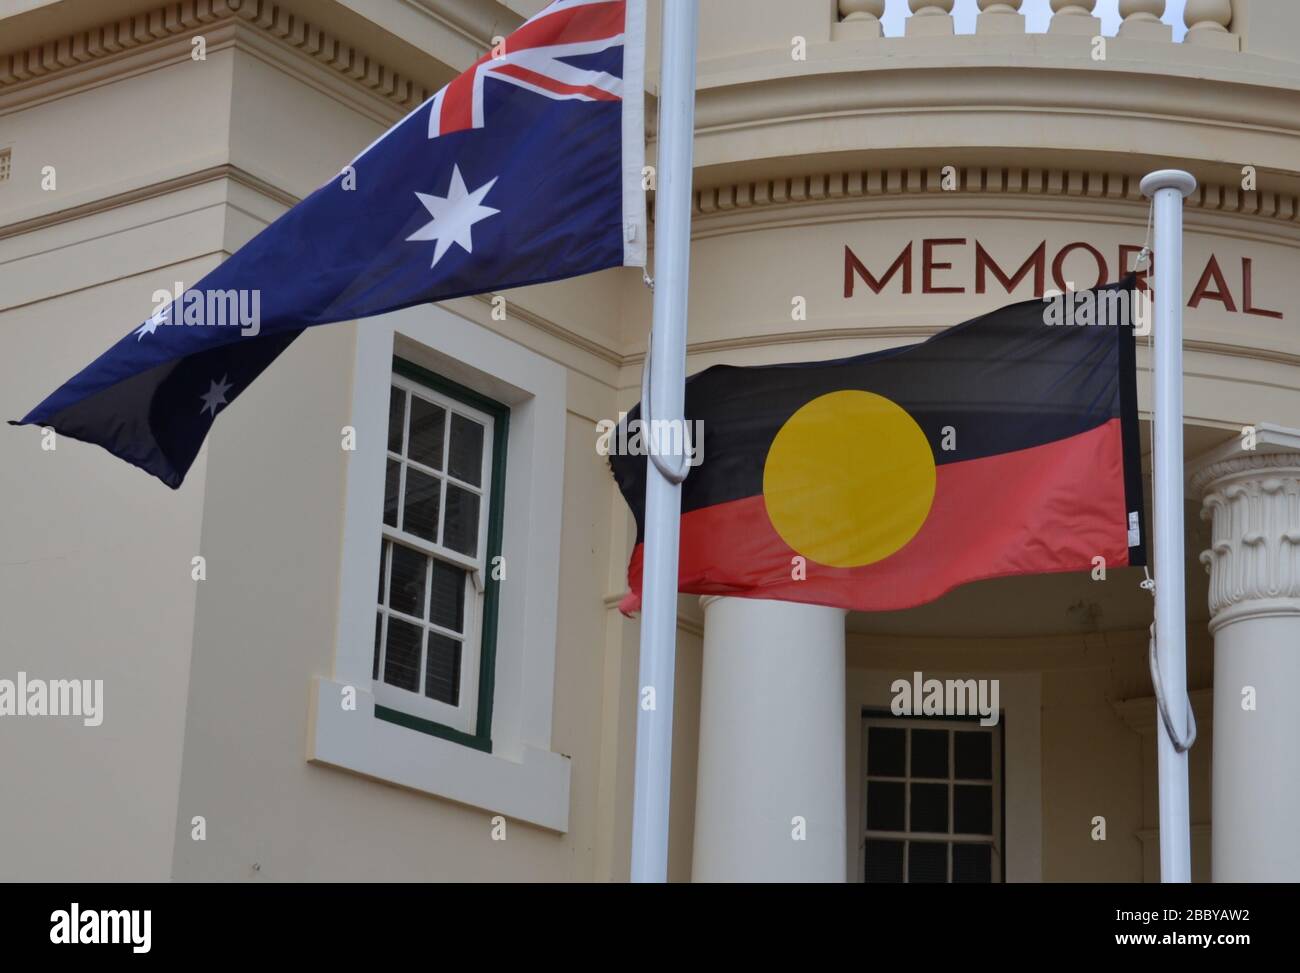 Aboriginal flag flying alongside the Australian national flag outside a memorial hall in regional town Stock Photo